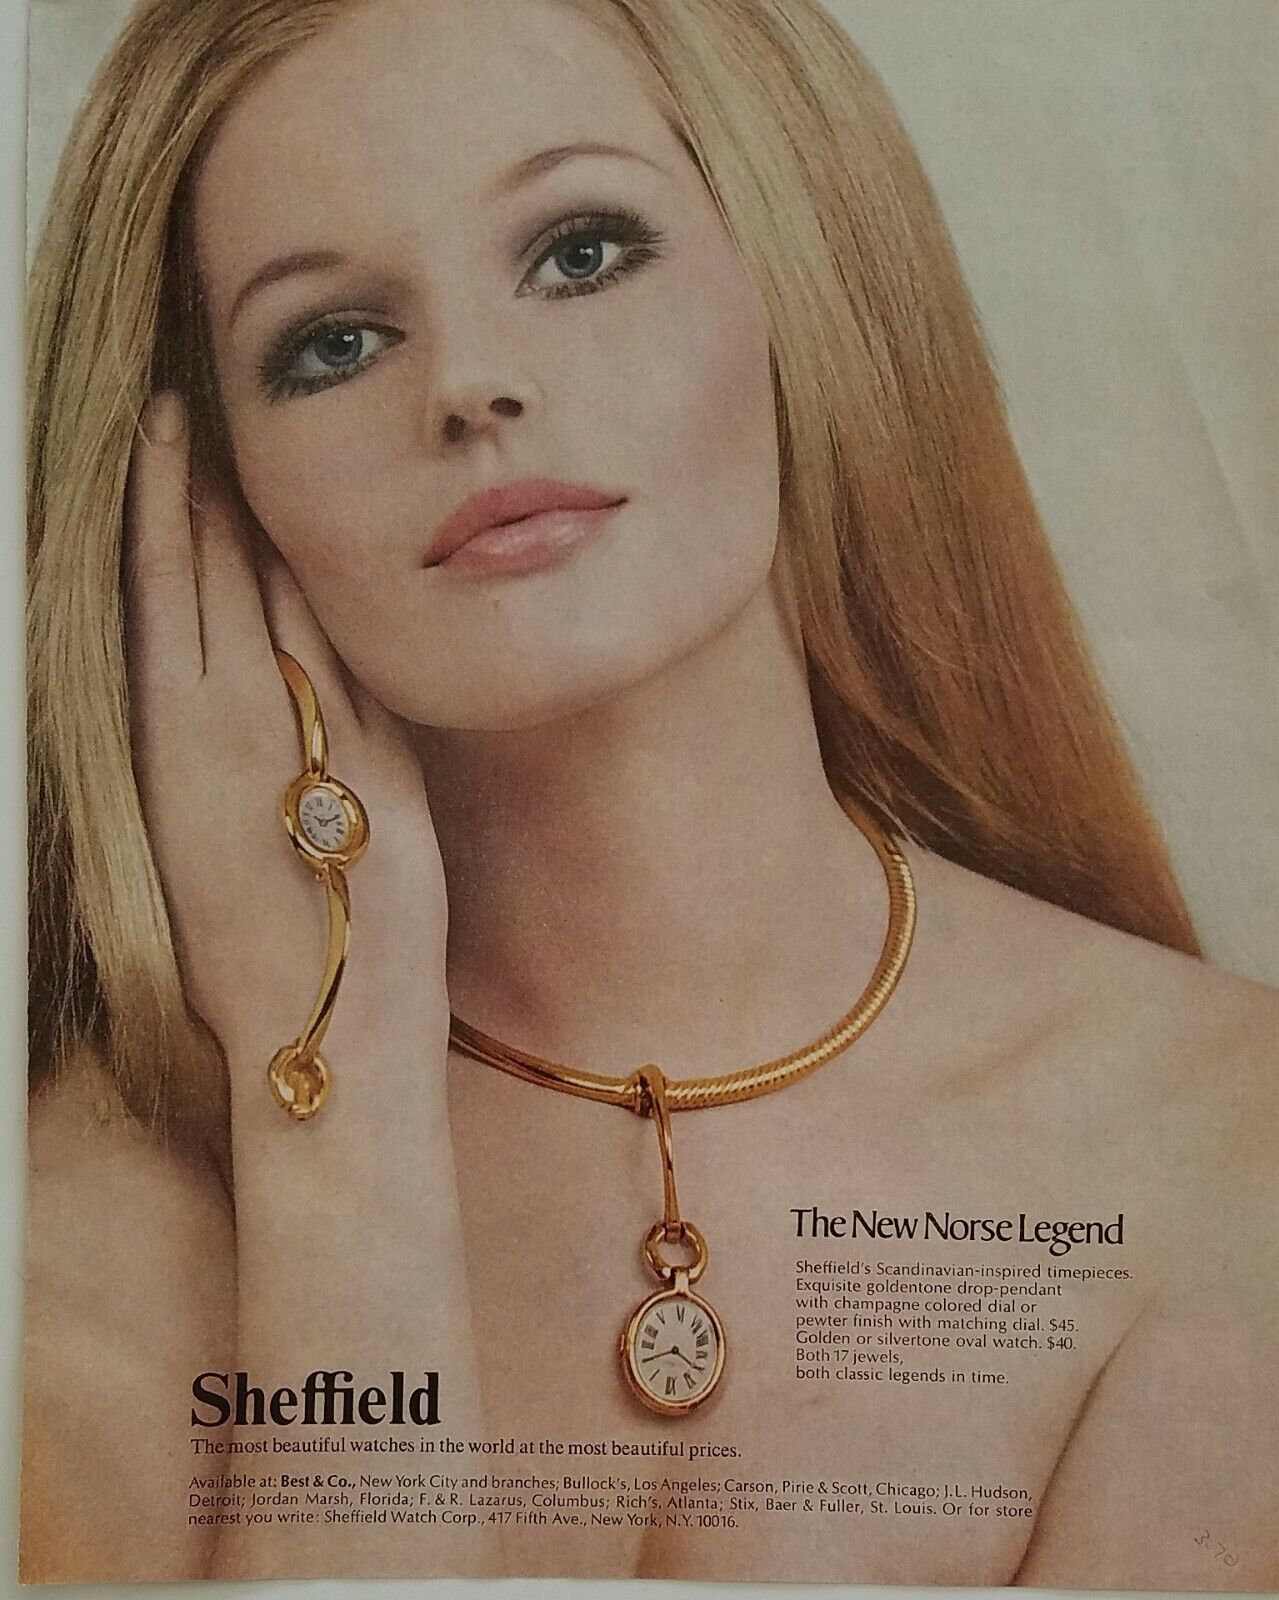 1972 Sheffield Scandinavian inspired Norse Legend watch necklace jewelry ad